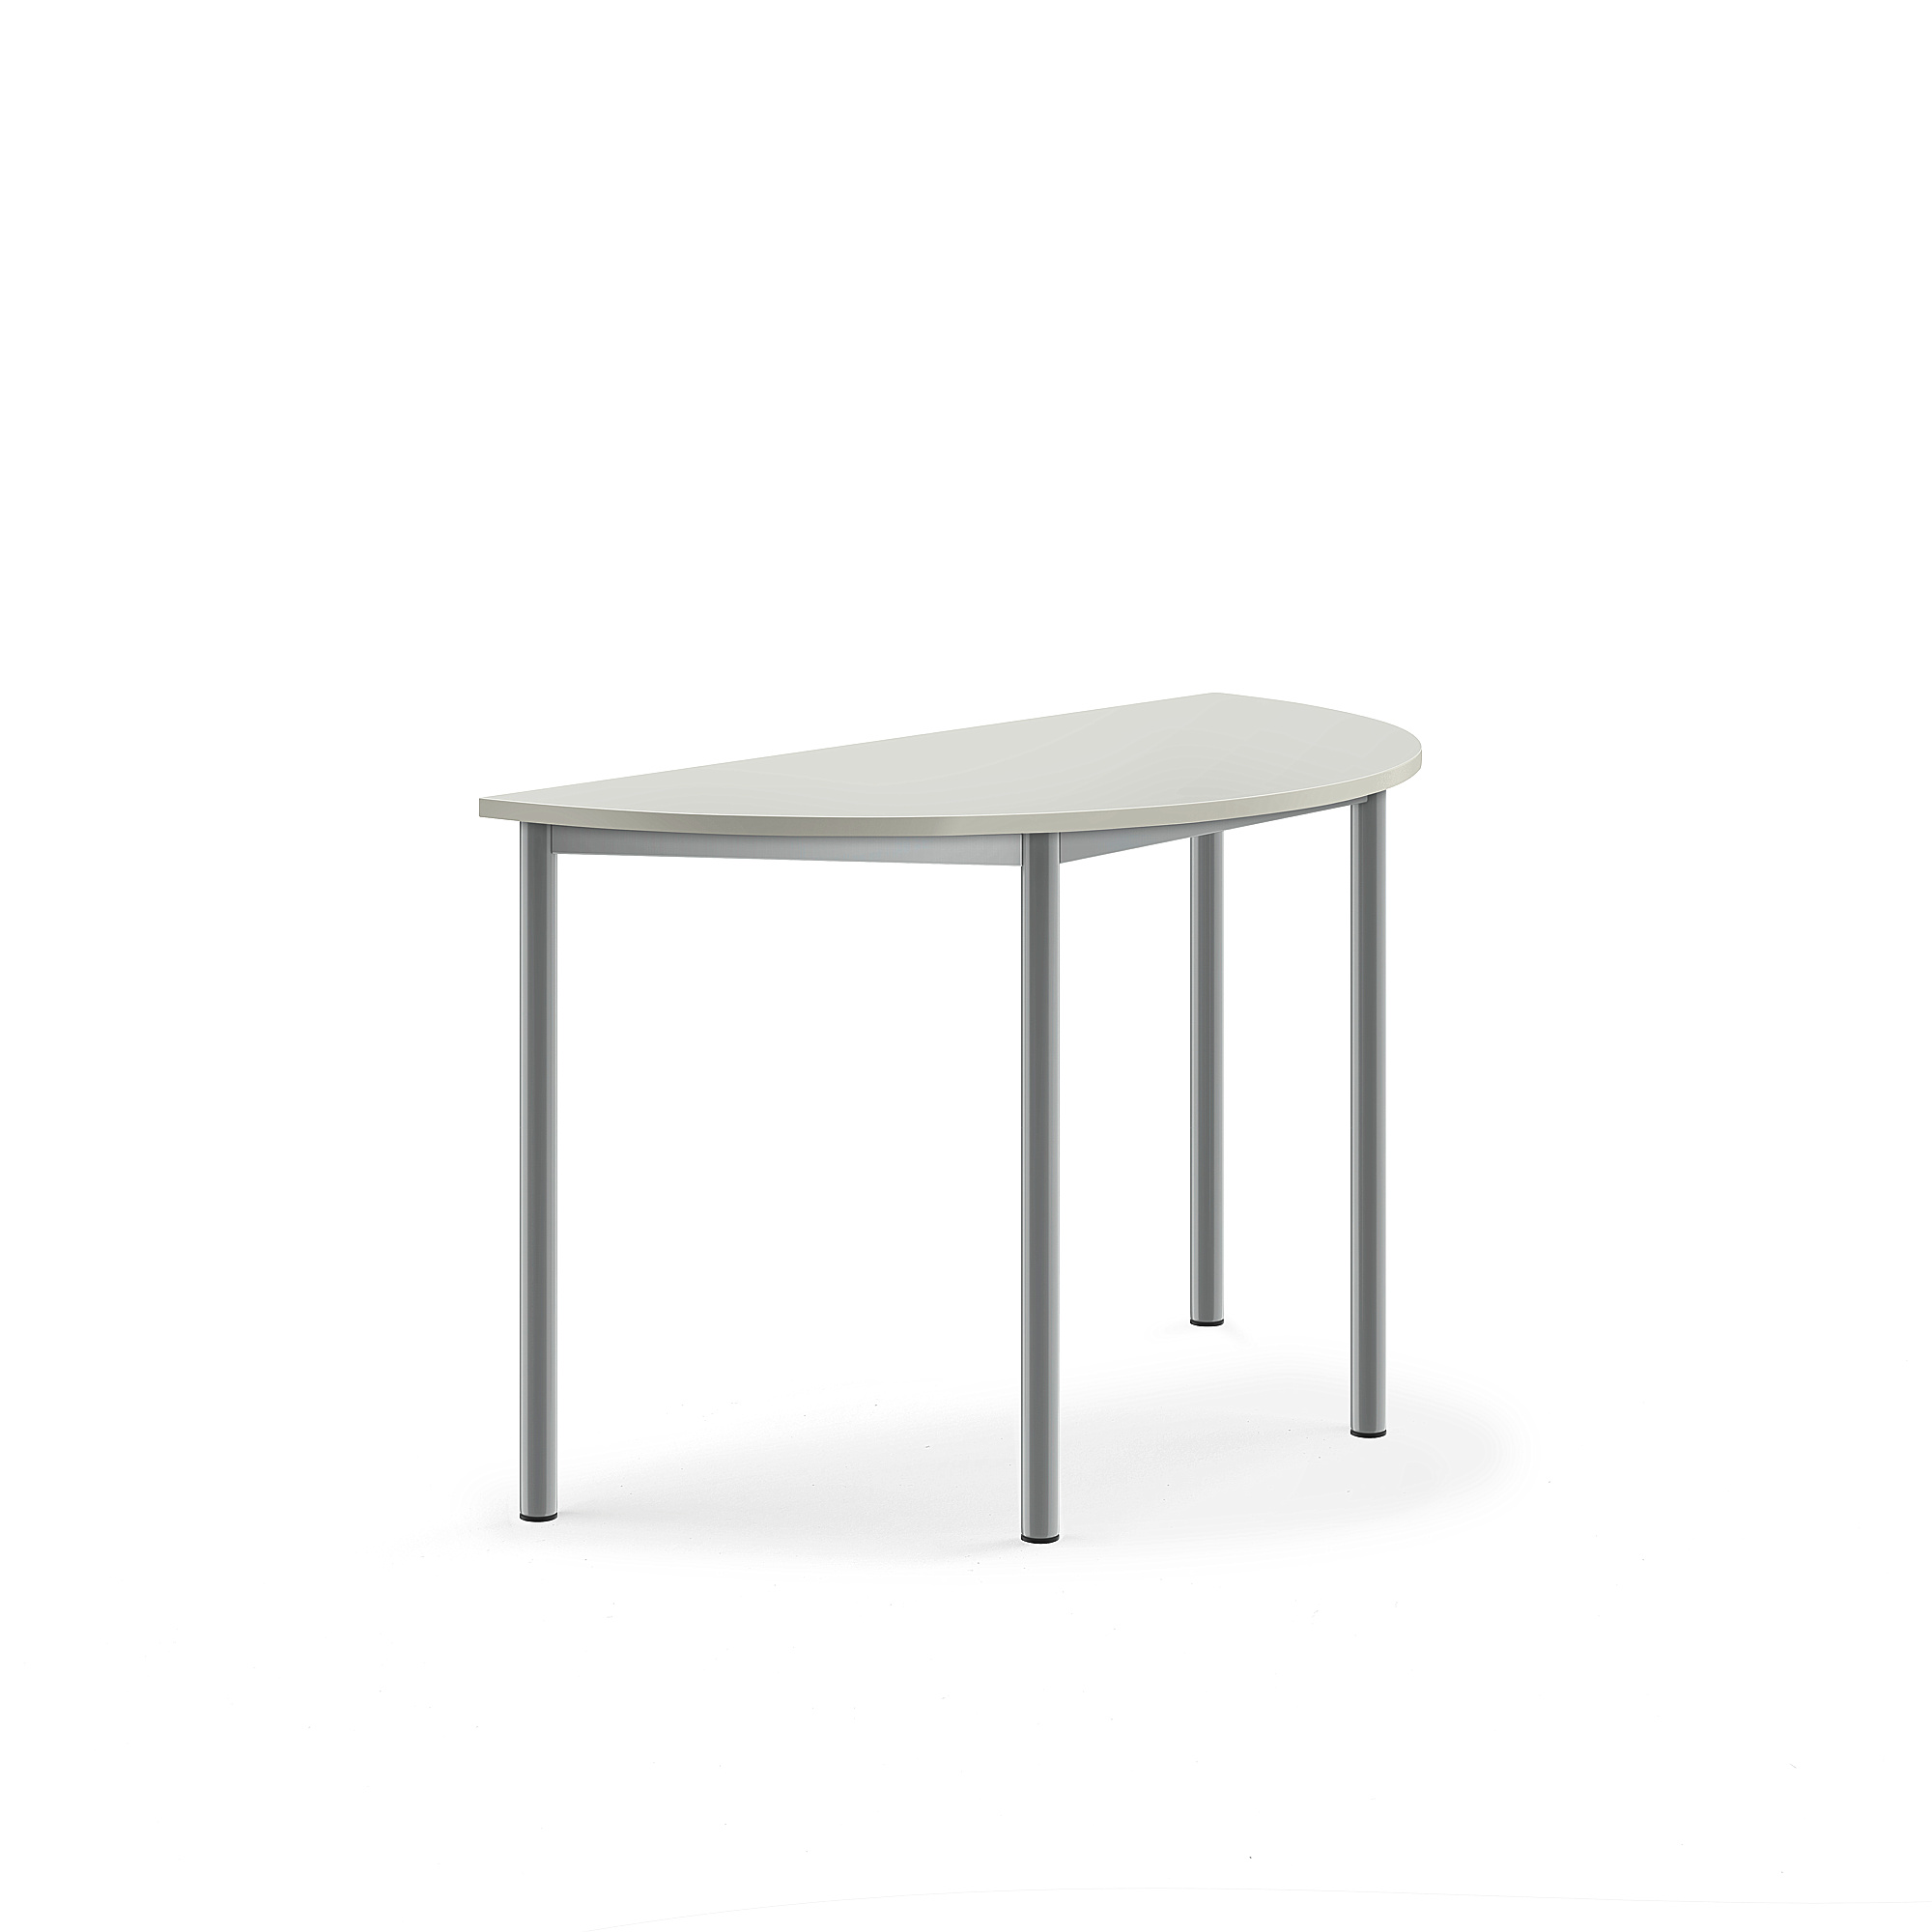 Stůl BORÅS, půlkruh, 1200x600x720 mm, stříbrné nohy, HPL deska, šedá